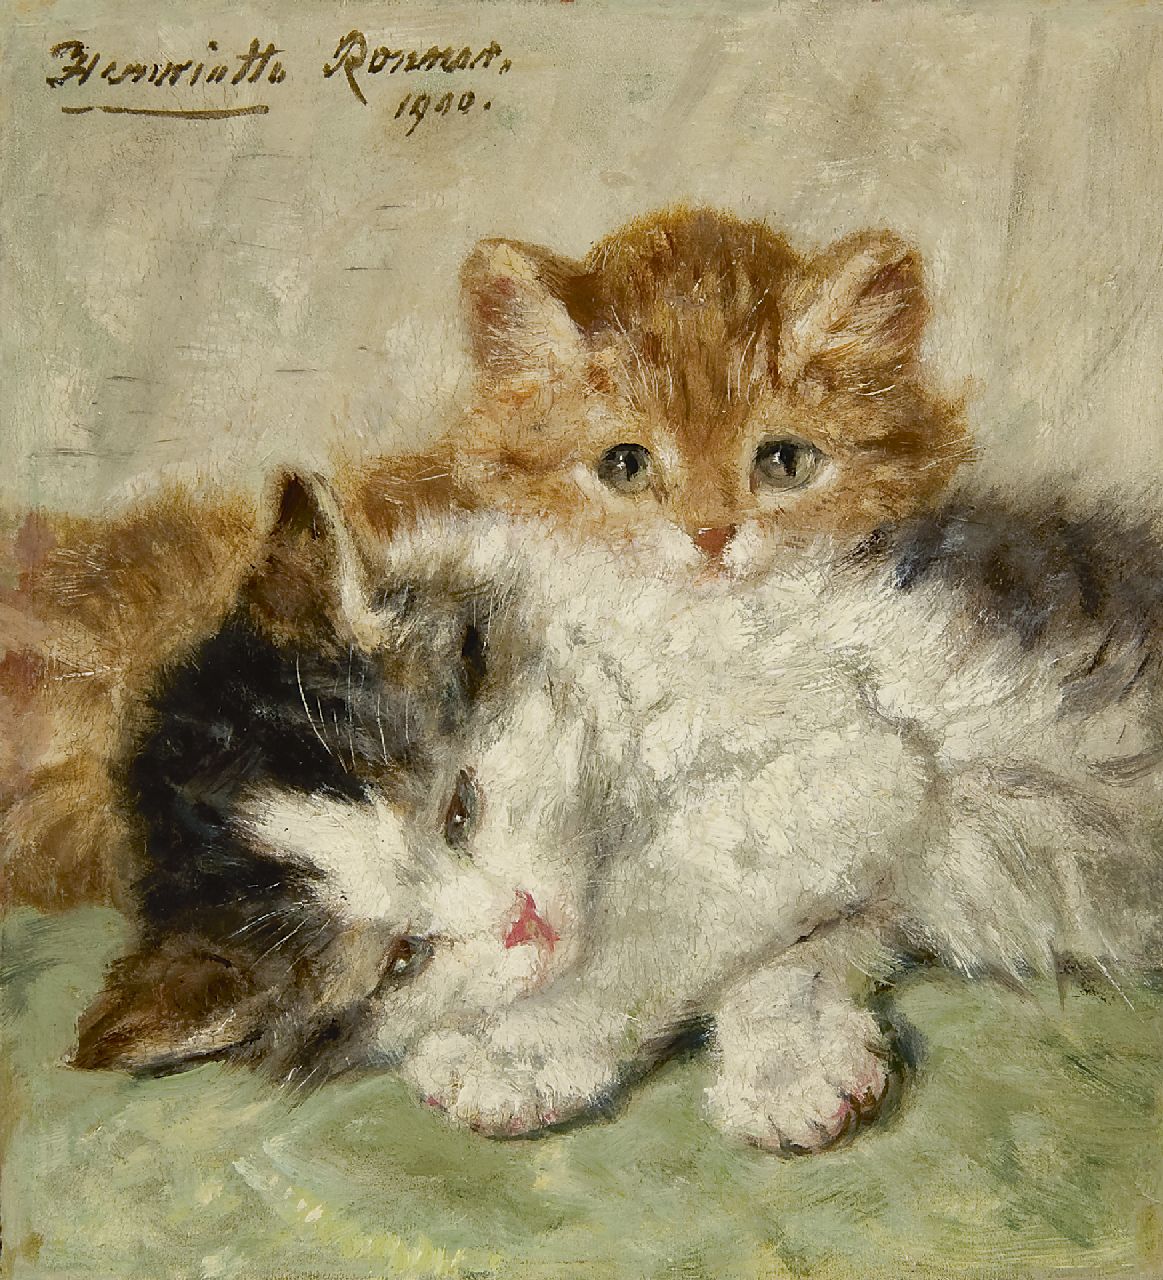 Ronner-Knip H.  | Henriette Ronner-Knip, Snoozing kittens, Öl auf Holz 17,9 x 16,5 cm, signed u.l. und dated 1900